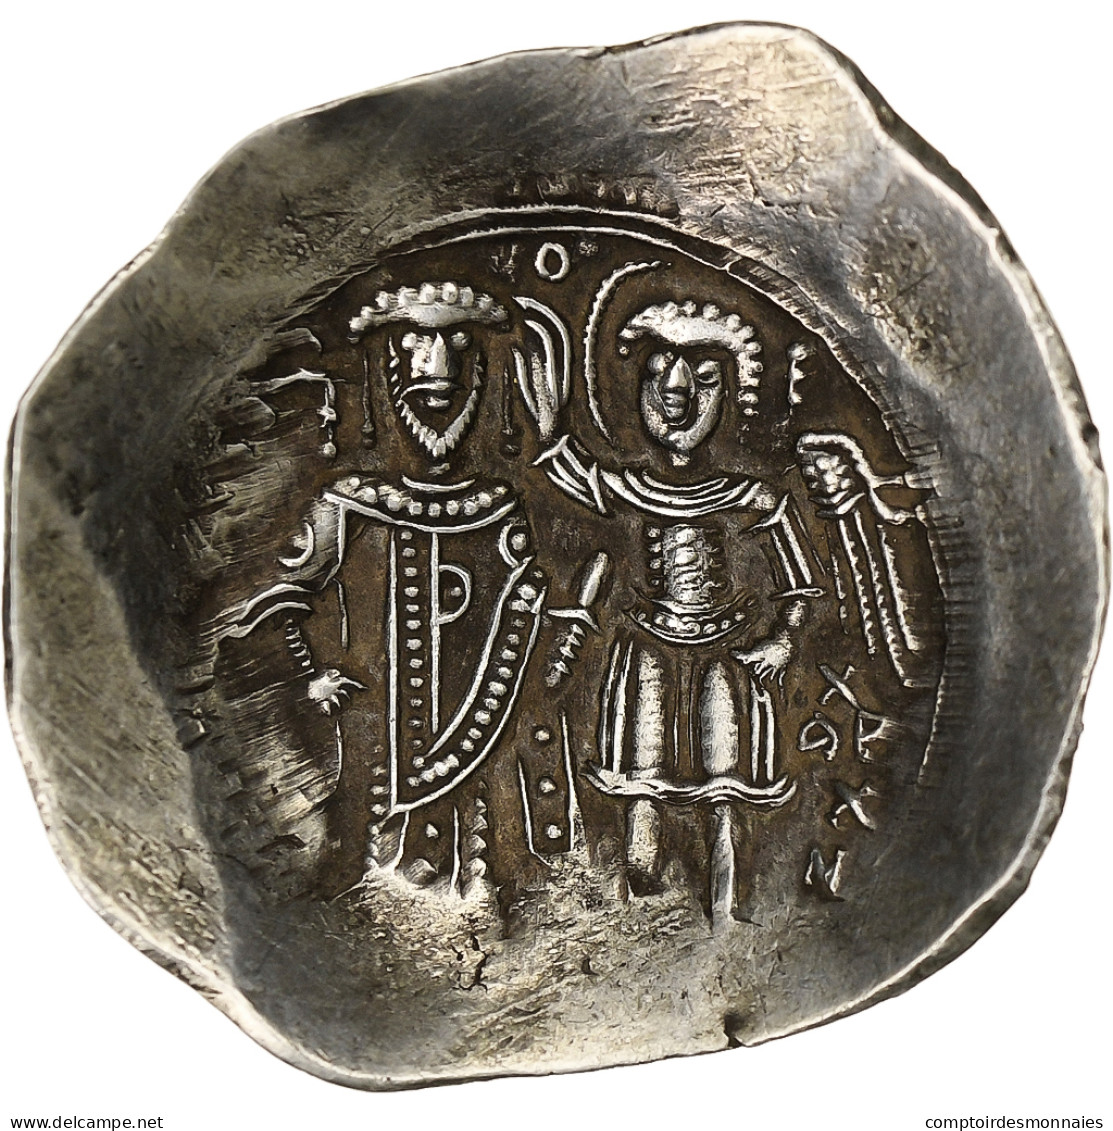 Isaac II Angelus, Aspron Trachy, 1185-1195, Constantinople, Electrum, SUP - Byzantium